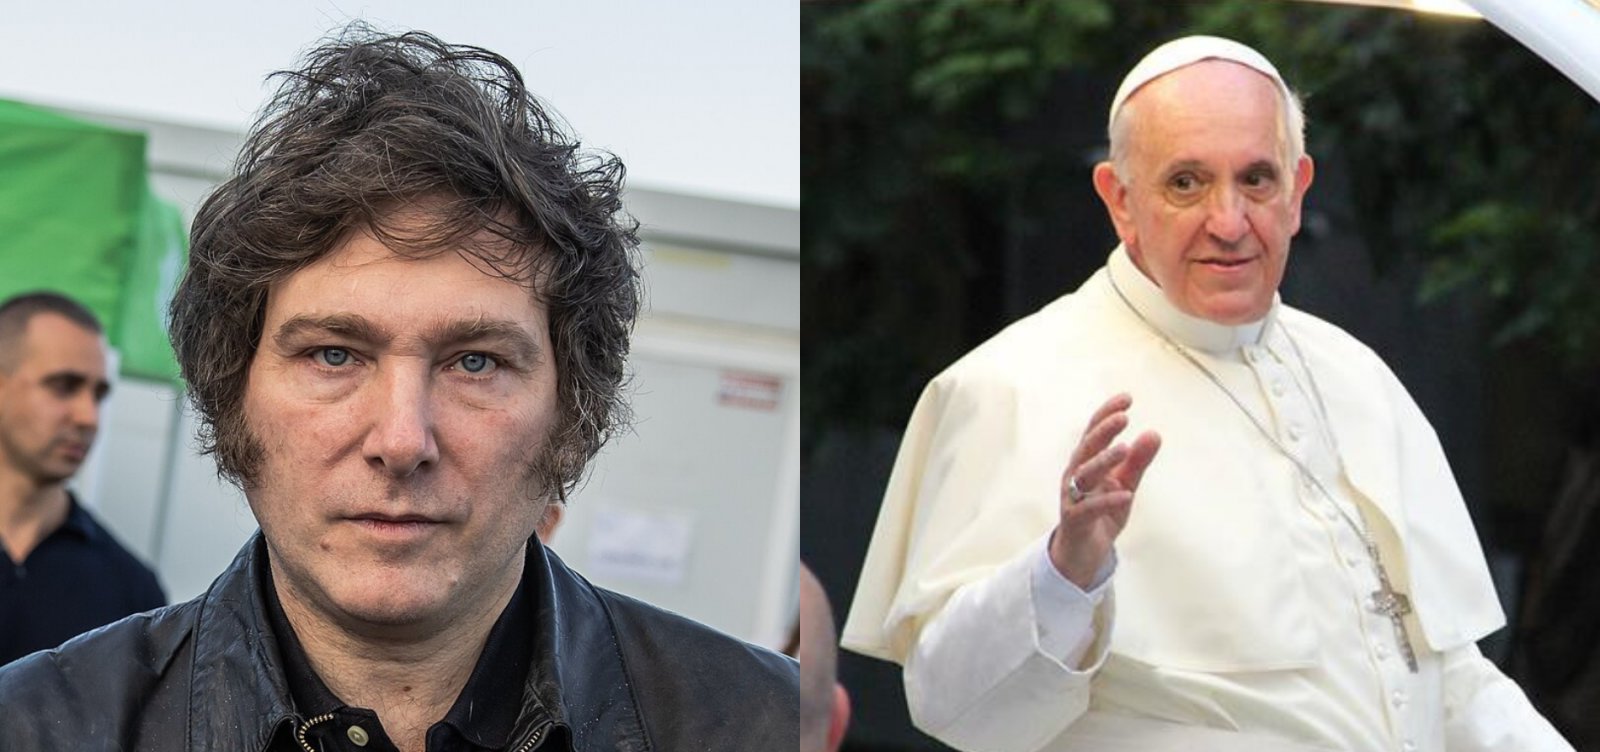 Javier Milei pede desculpas por ataques contra papa Francisco: “Sinto muito por isso”